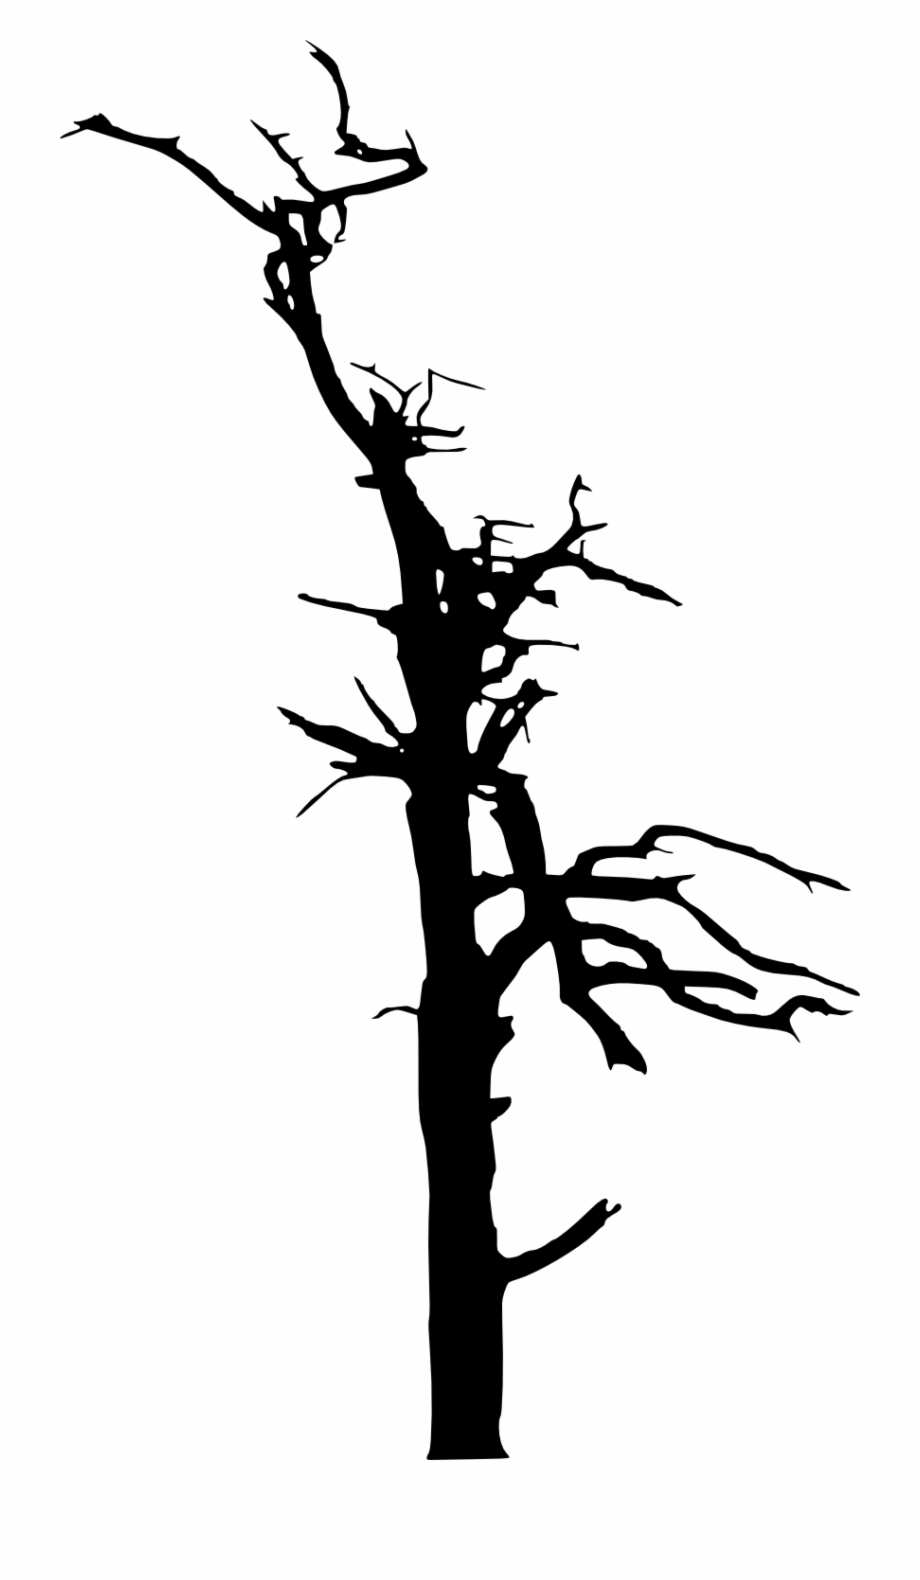 royalty free burnt tree silhouette
